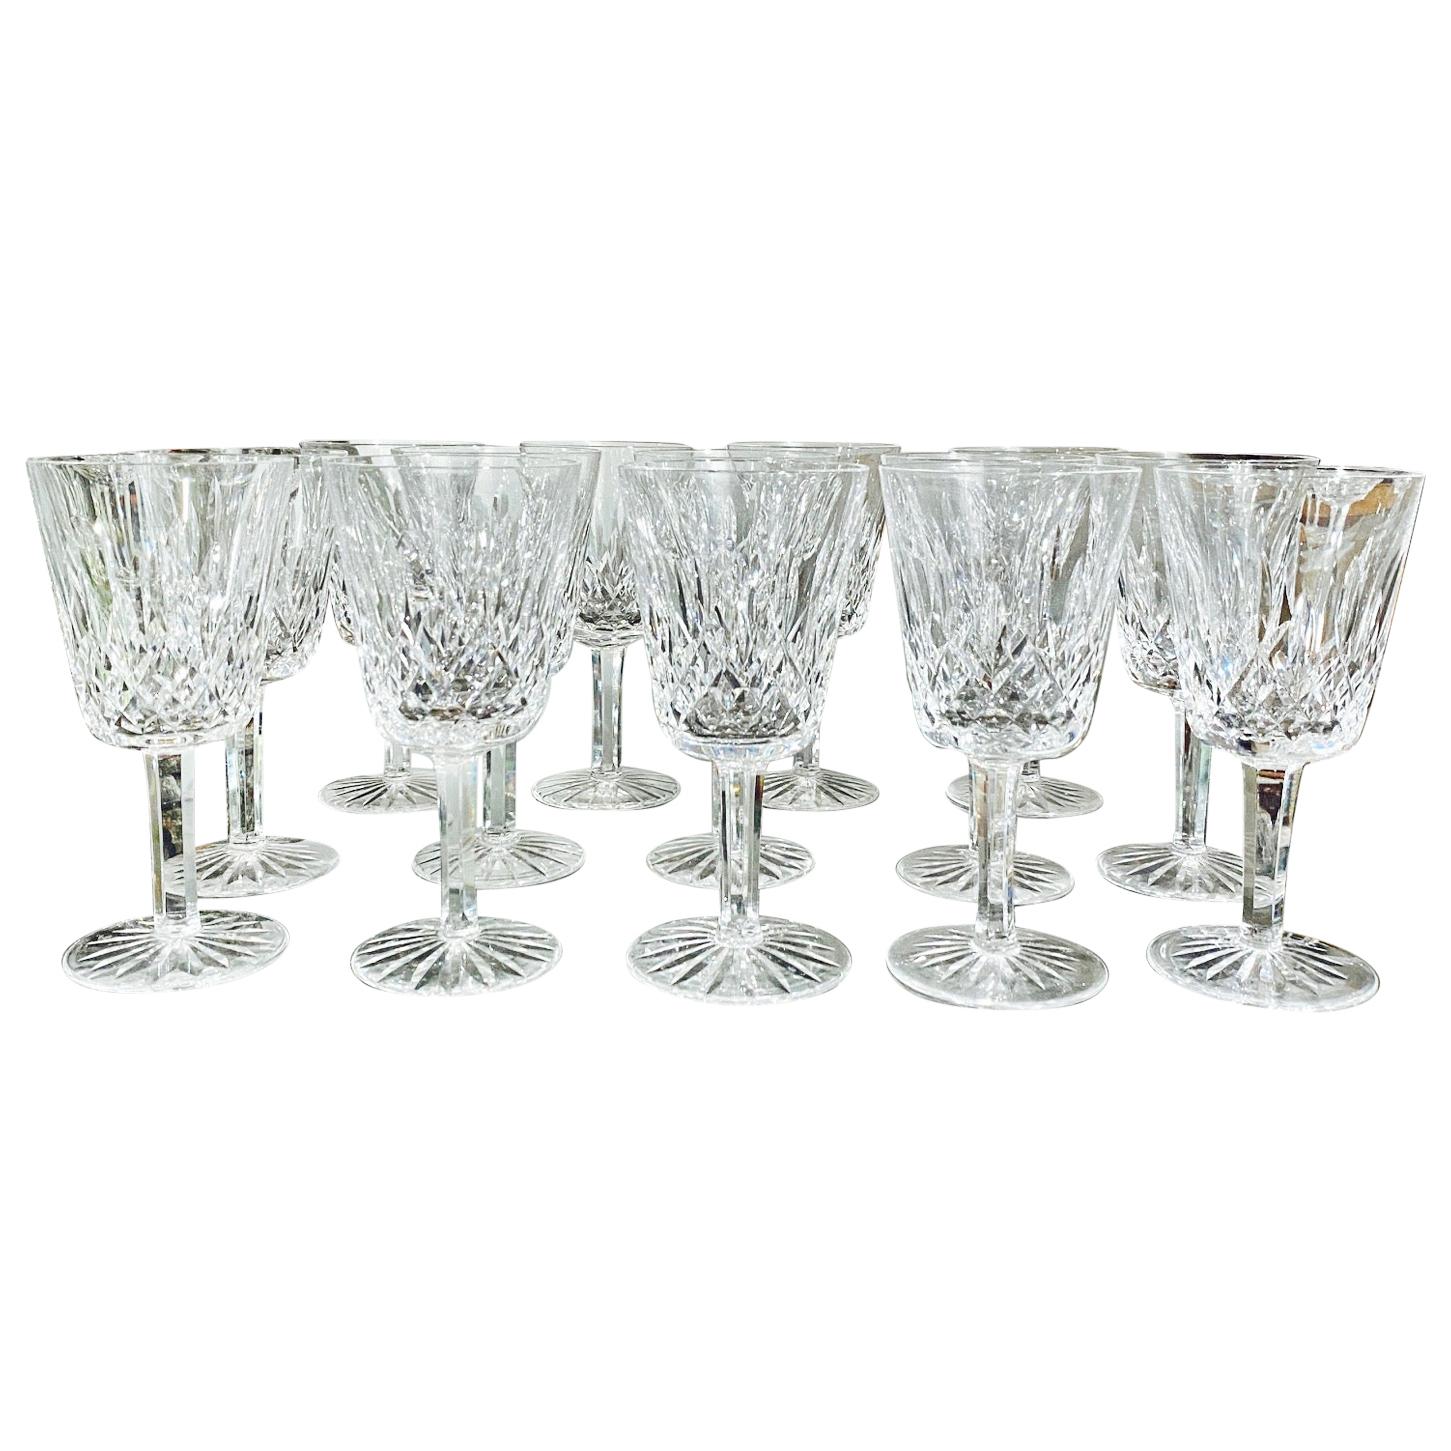 https://a.1stdibscdn.com/set-of-14-vintage-waterford-crystal-lismore-water-goblets-germany-c-1990s-for-sale/1121189/f_213447621605714902569/21344762_master.jpg